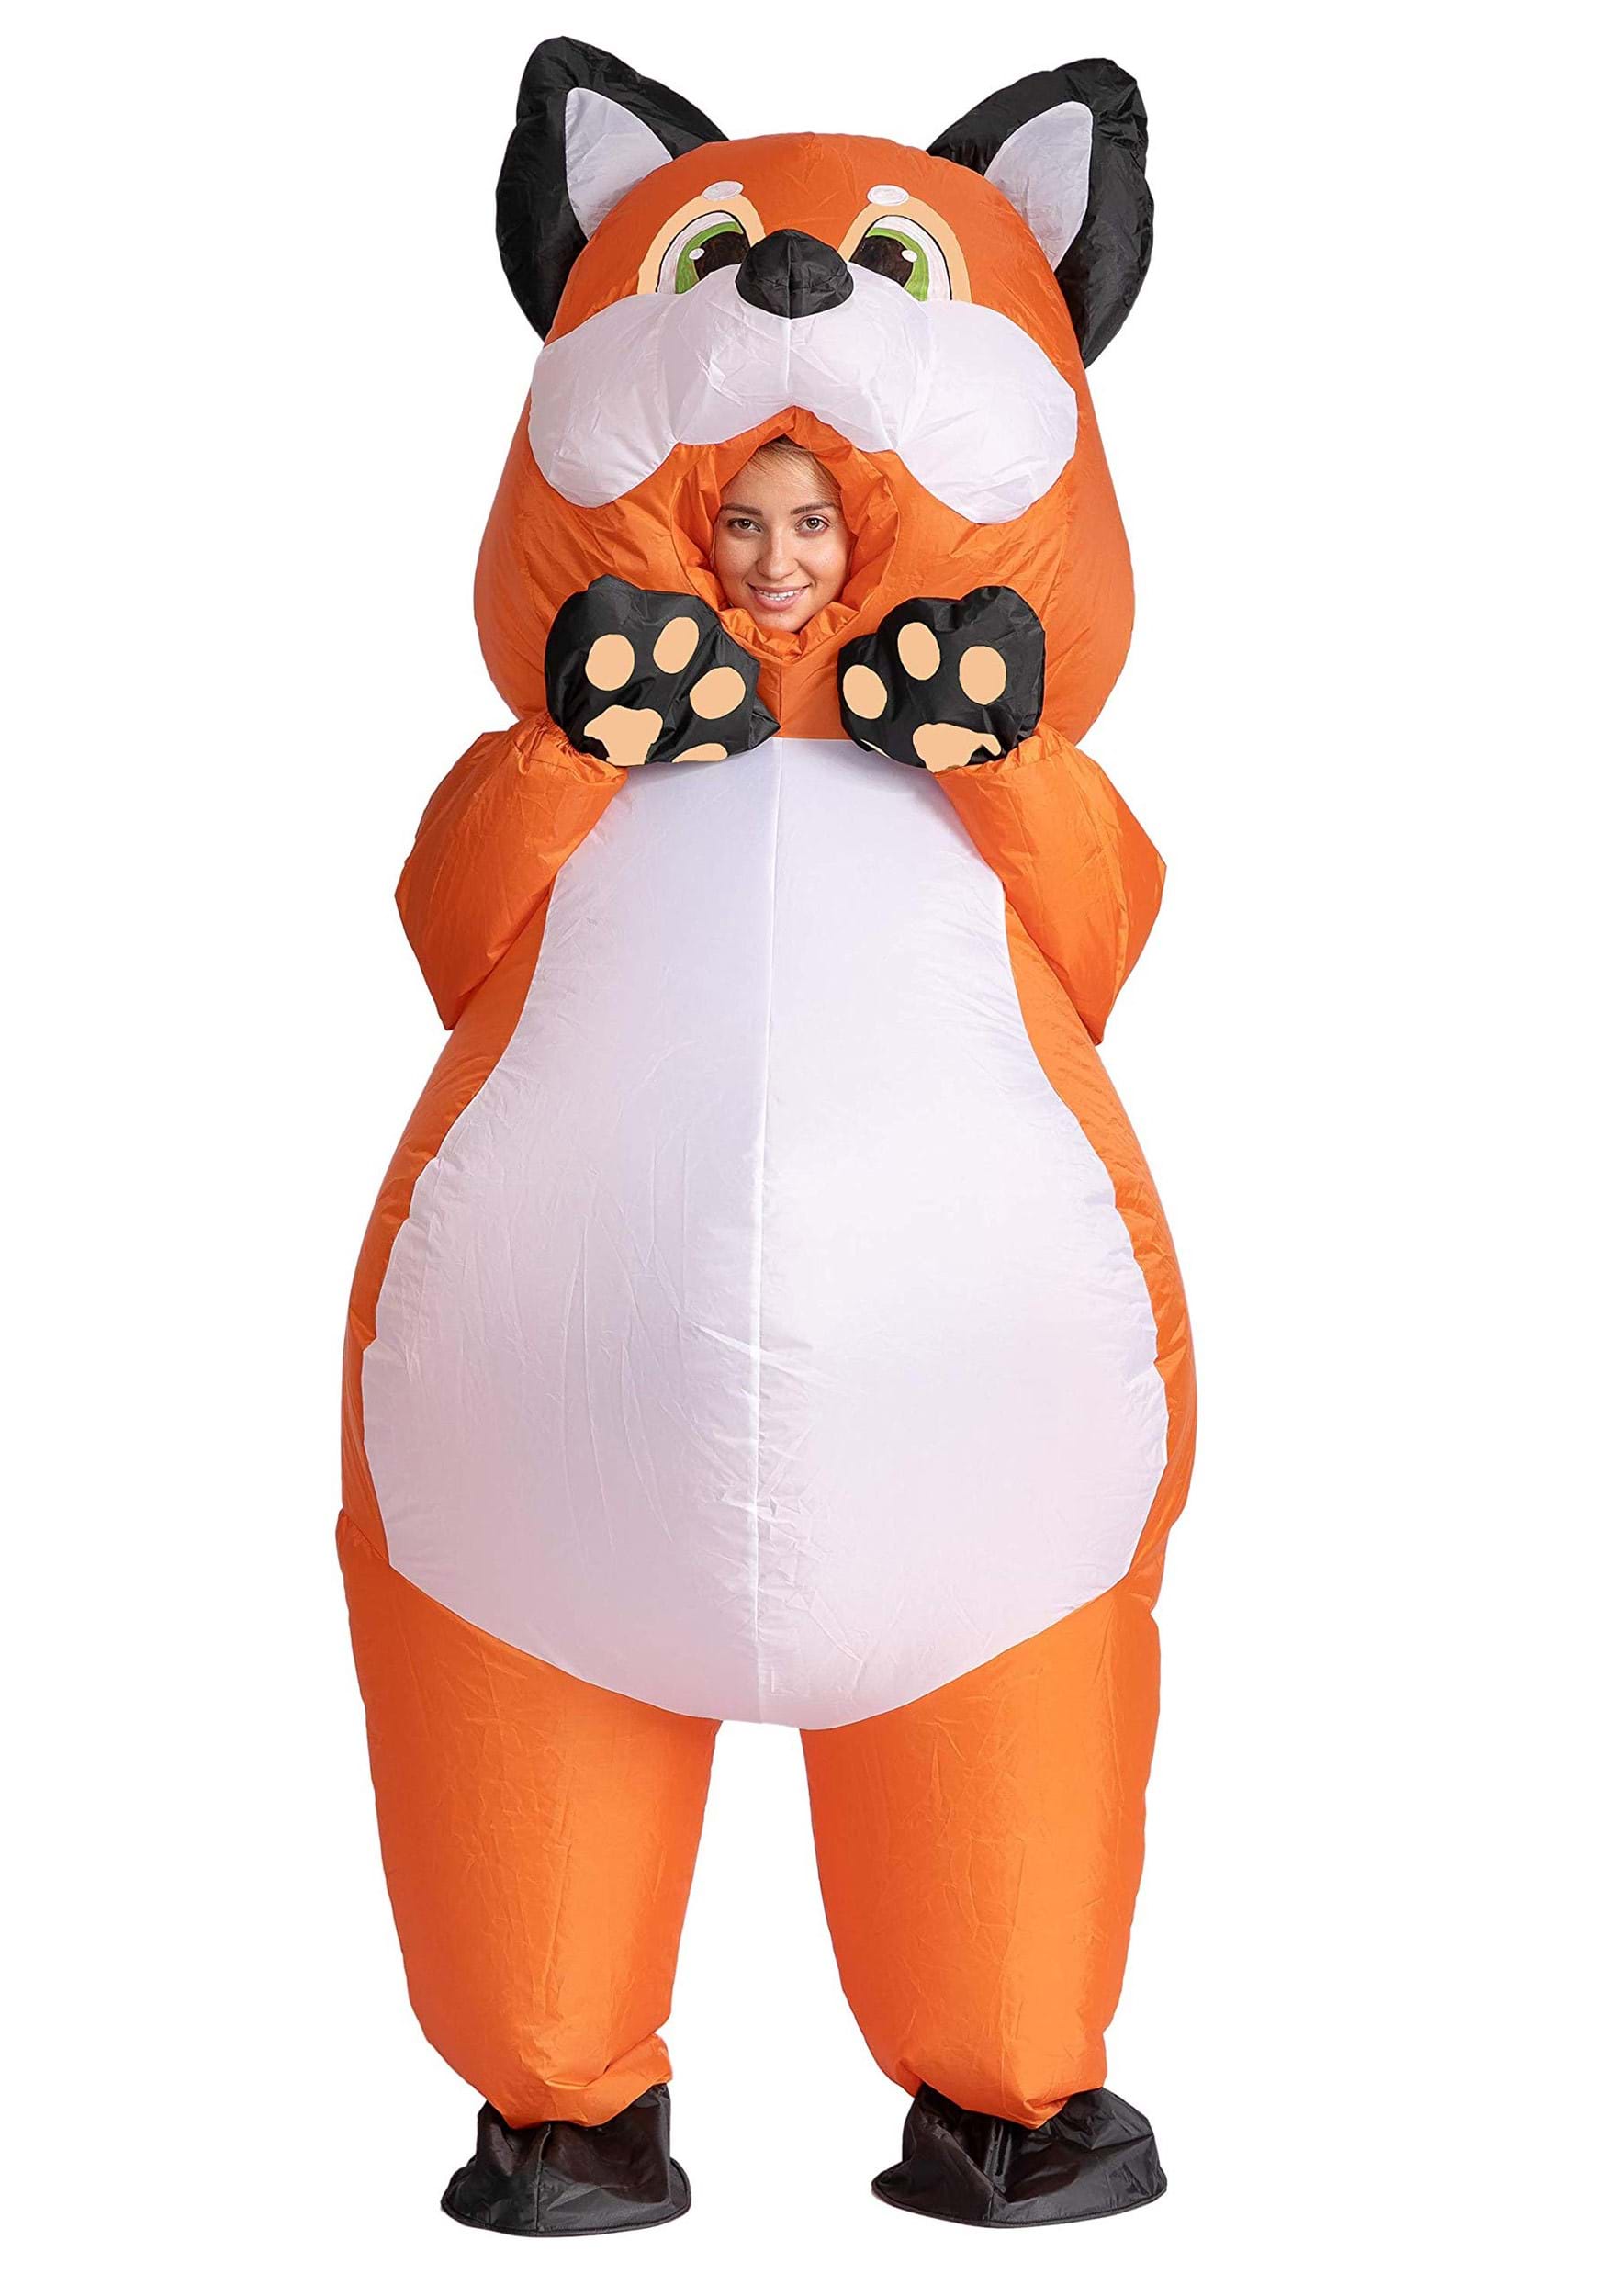 Fantasia inflável de Minion - Minion Inflatable Adult Costume